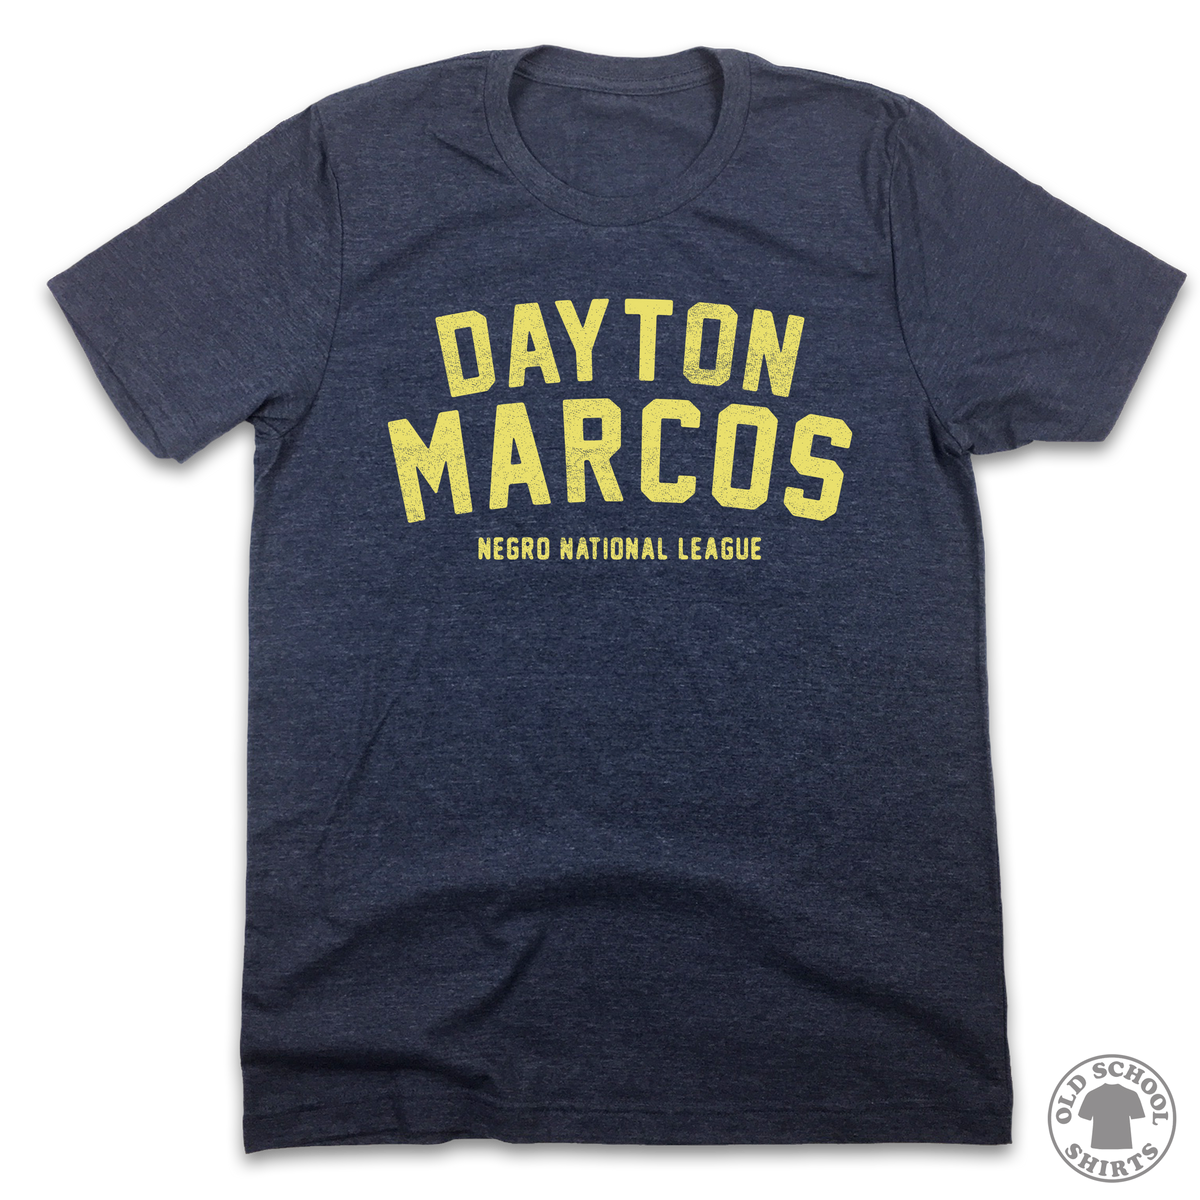 Dayton Marcos - Old School Shirts- Retro Sports T Shirts